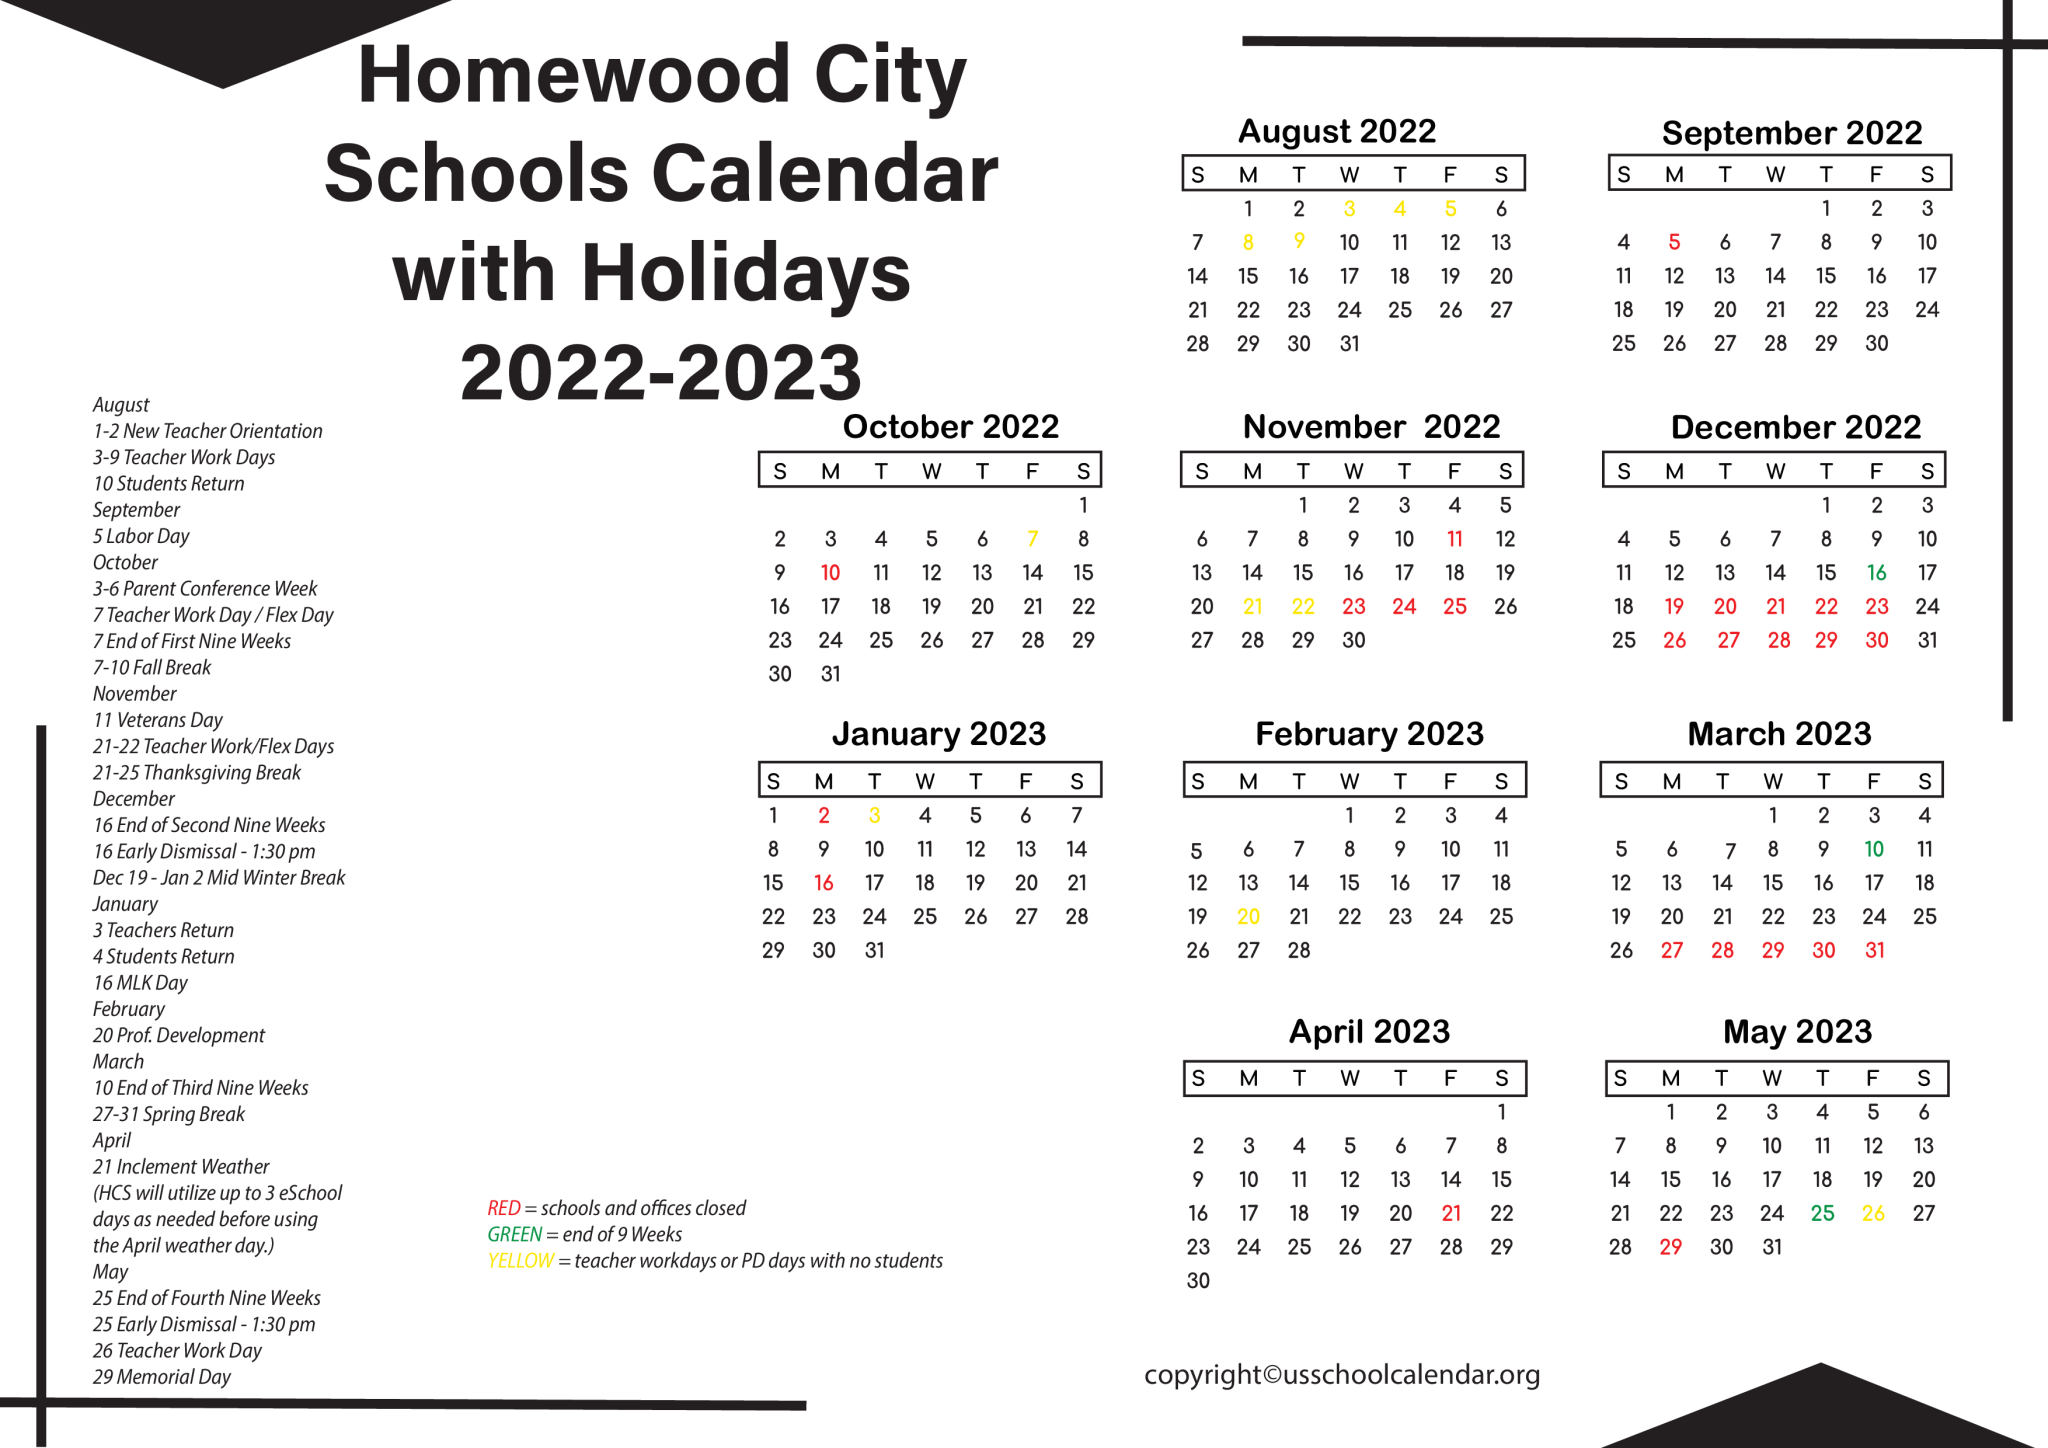 Homewood City Schools Calendar with Holidays 2023